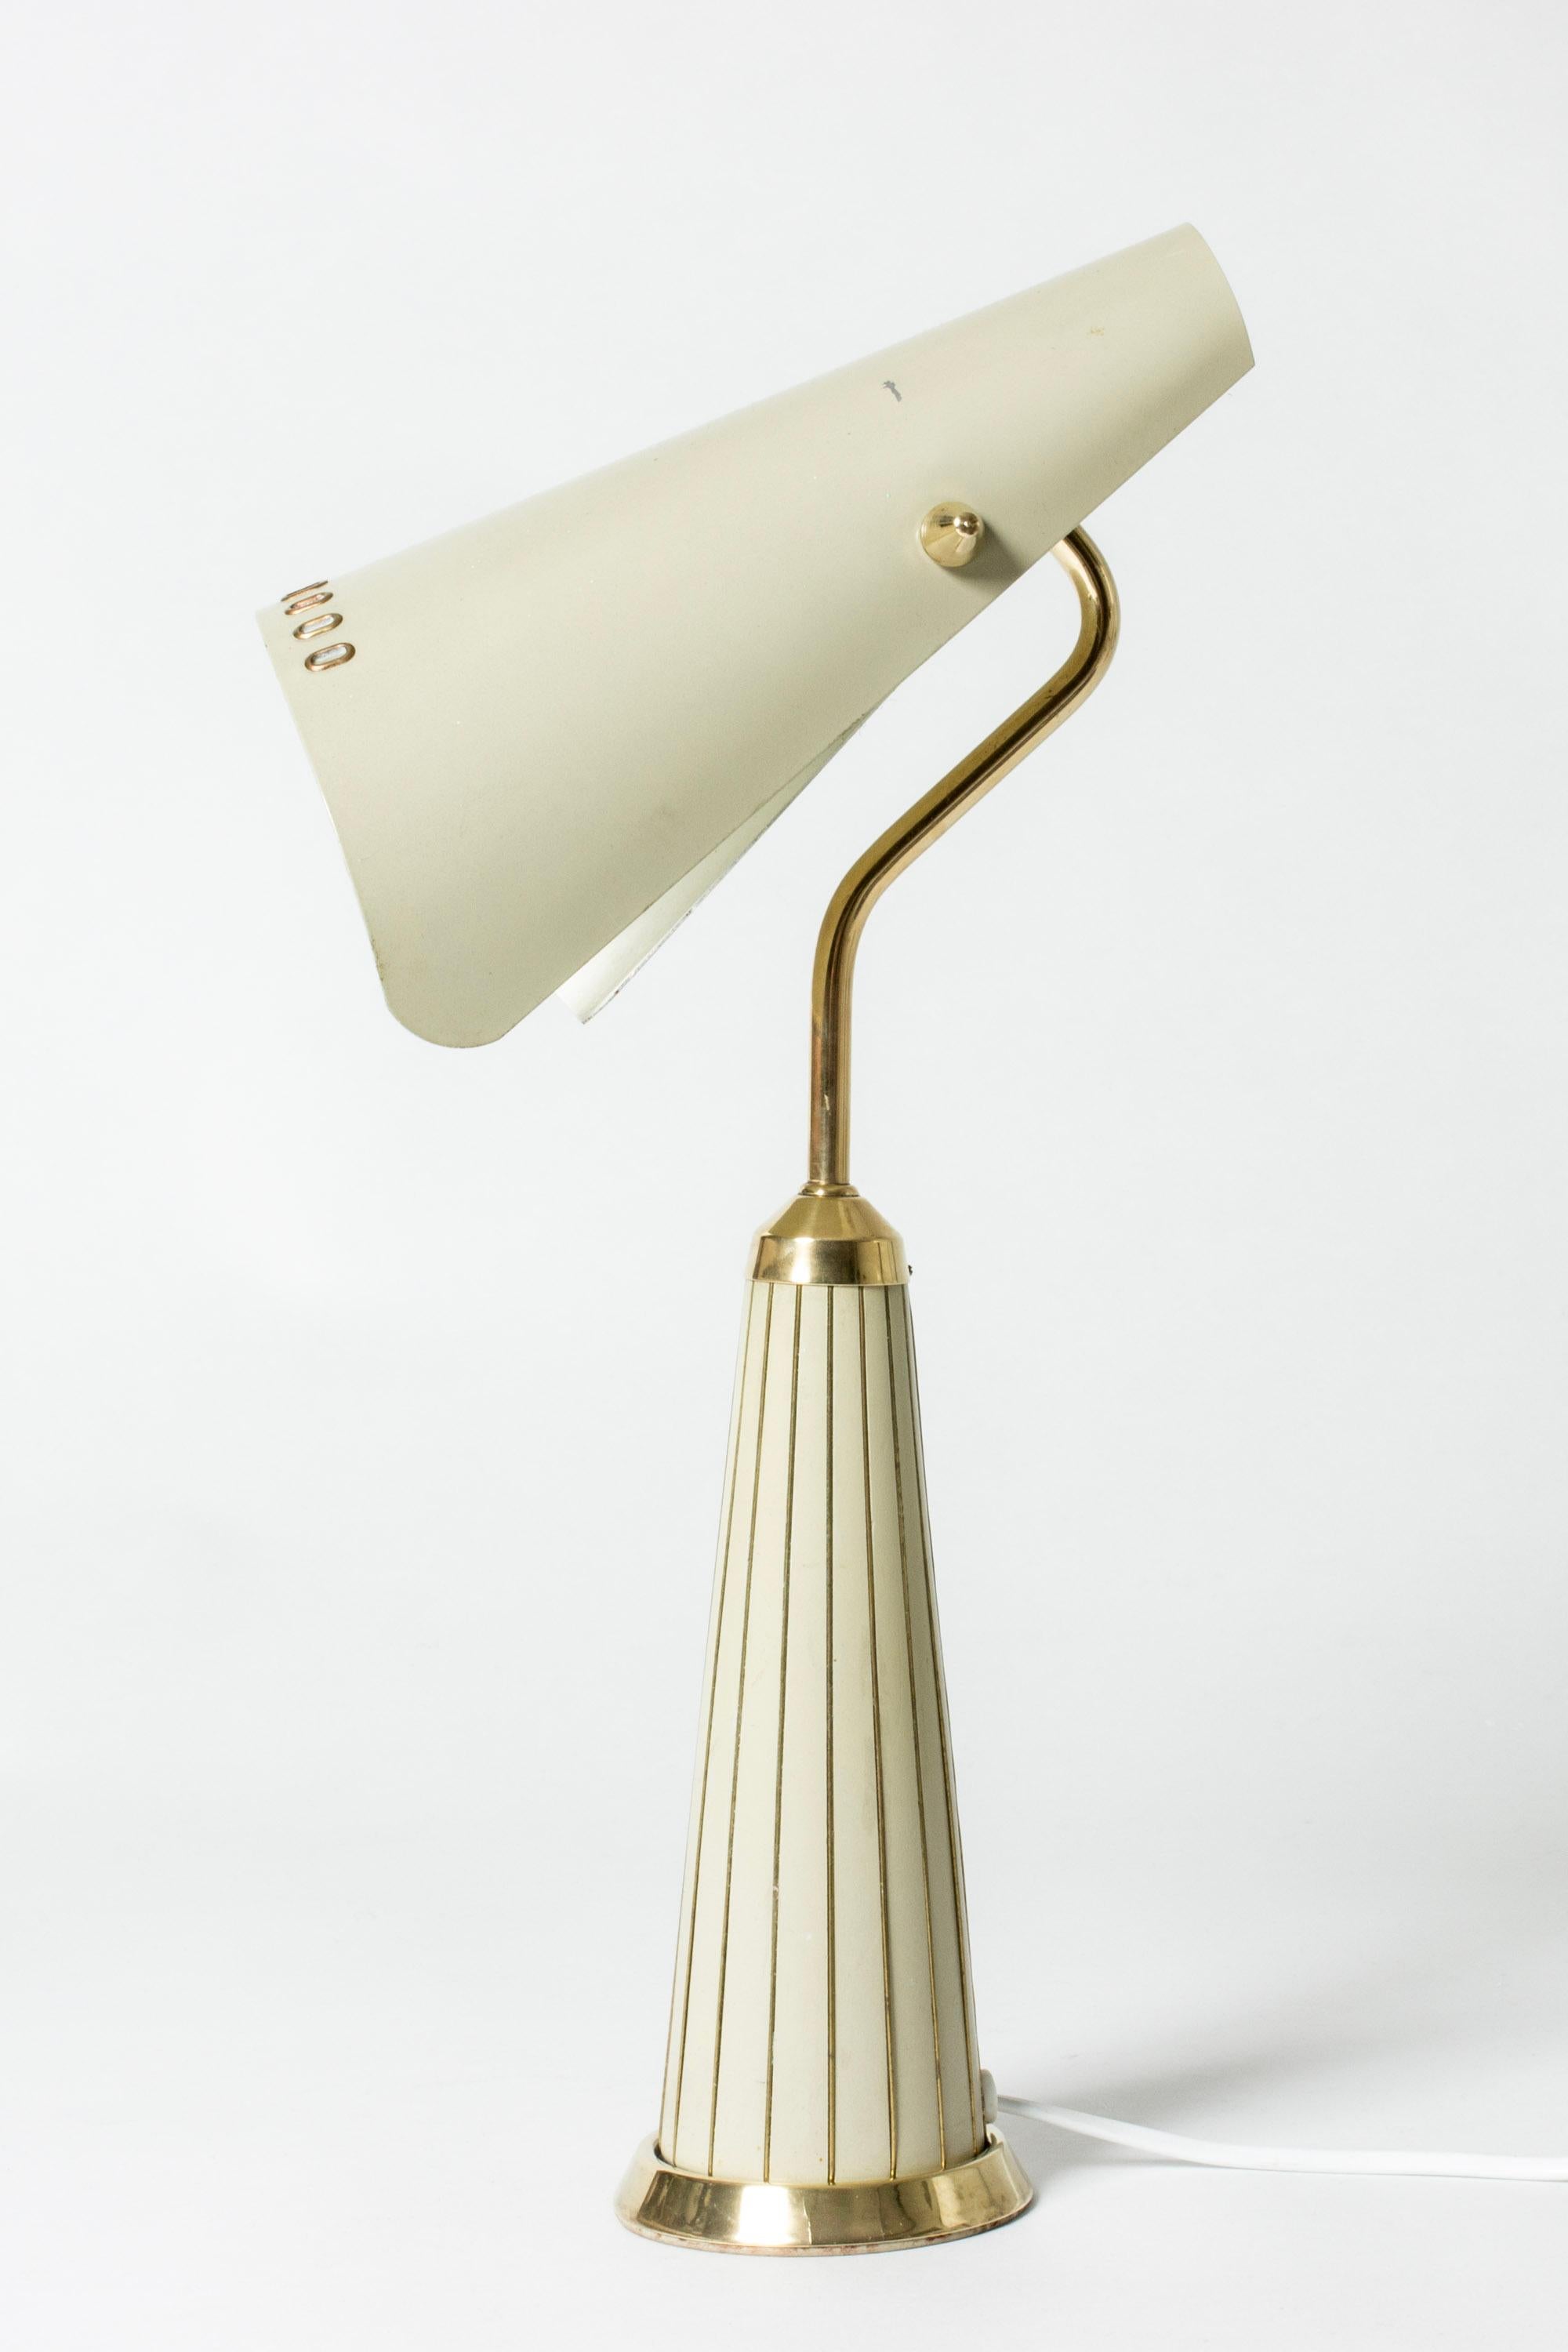 Scandinavian Modern Swedish Modern Brass Table Lamp from Fåglavik, Sweden, 1950s For Sale